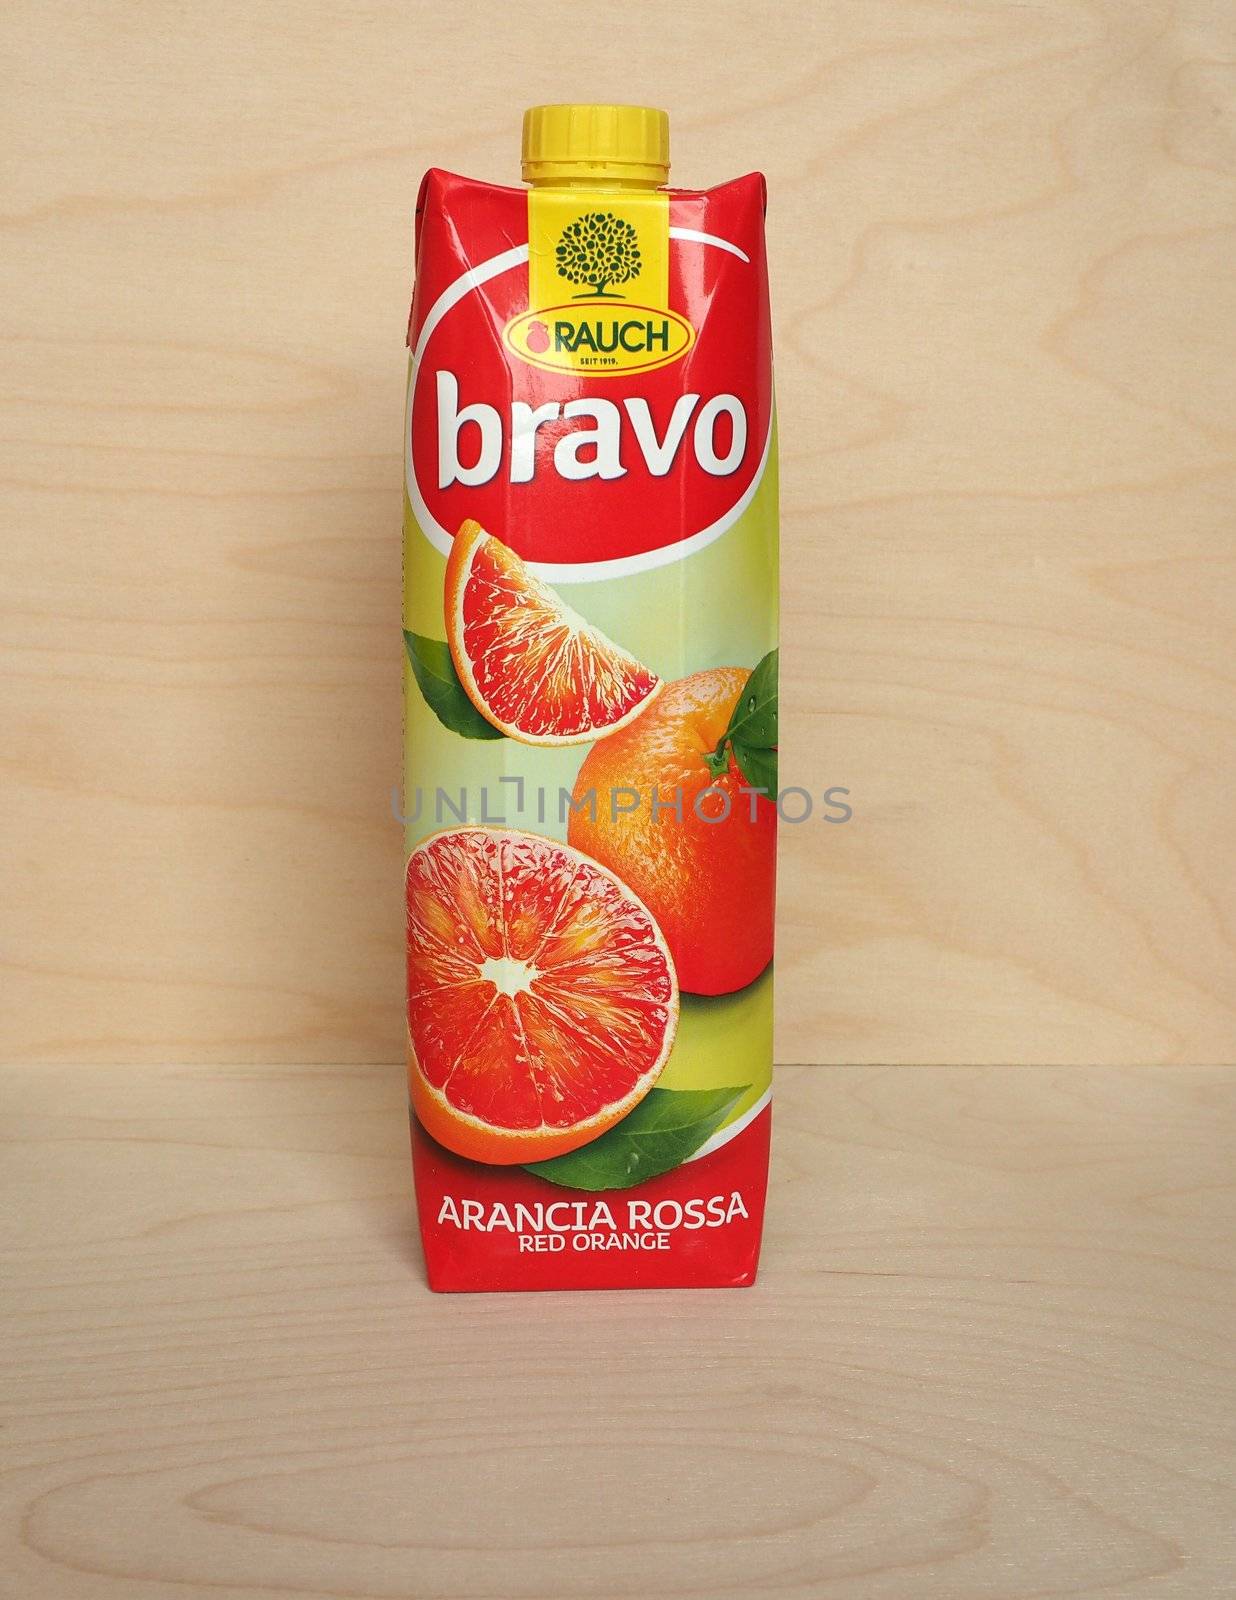 RANKWEIL, AUSTRIA - CIRCA APRIL 2020: Rauch Bravo red orange juice packet